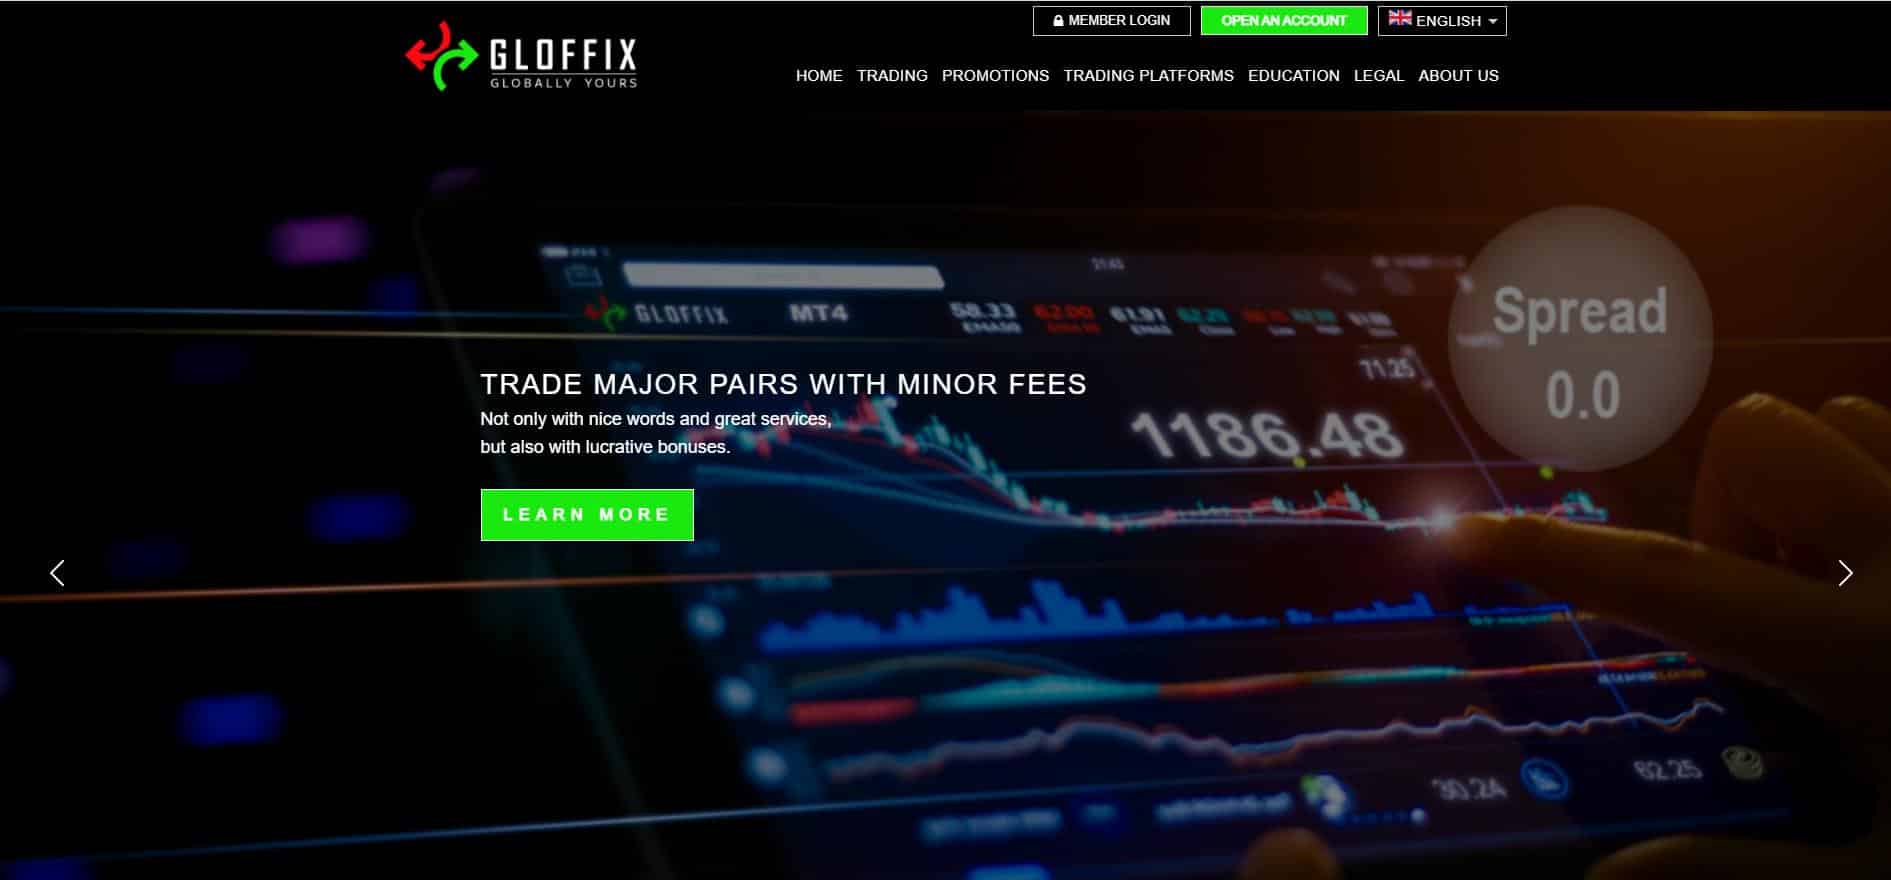 Gloffix CFD brokerage